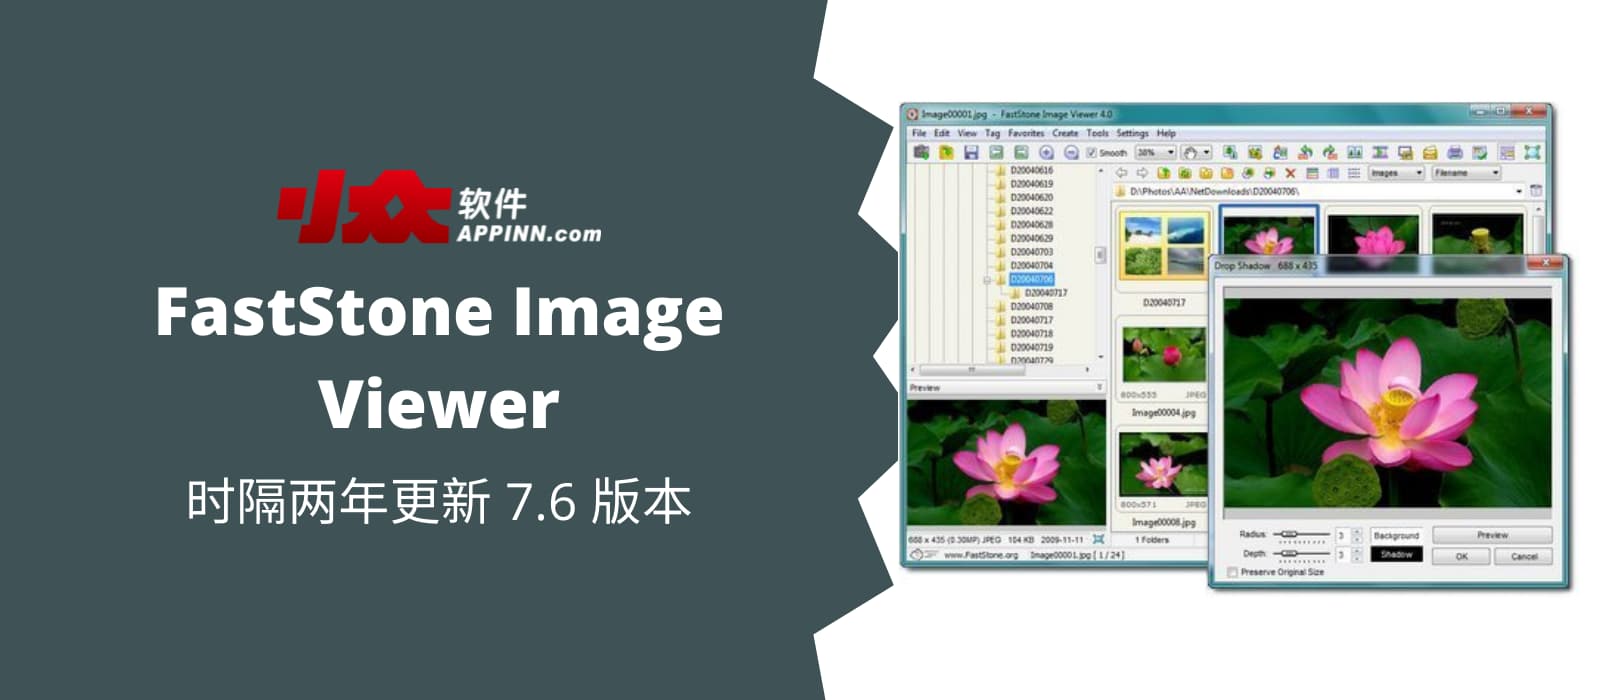 FastStone Image Viewer 时隔两年更新 7.6 版本